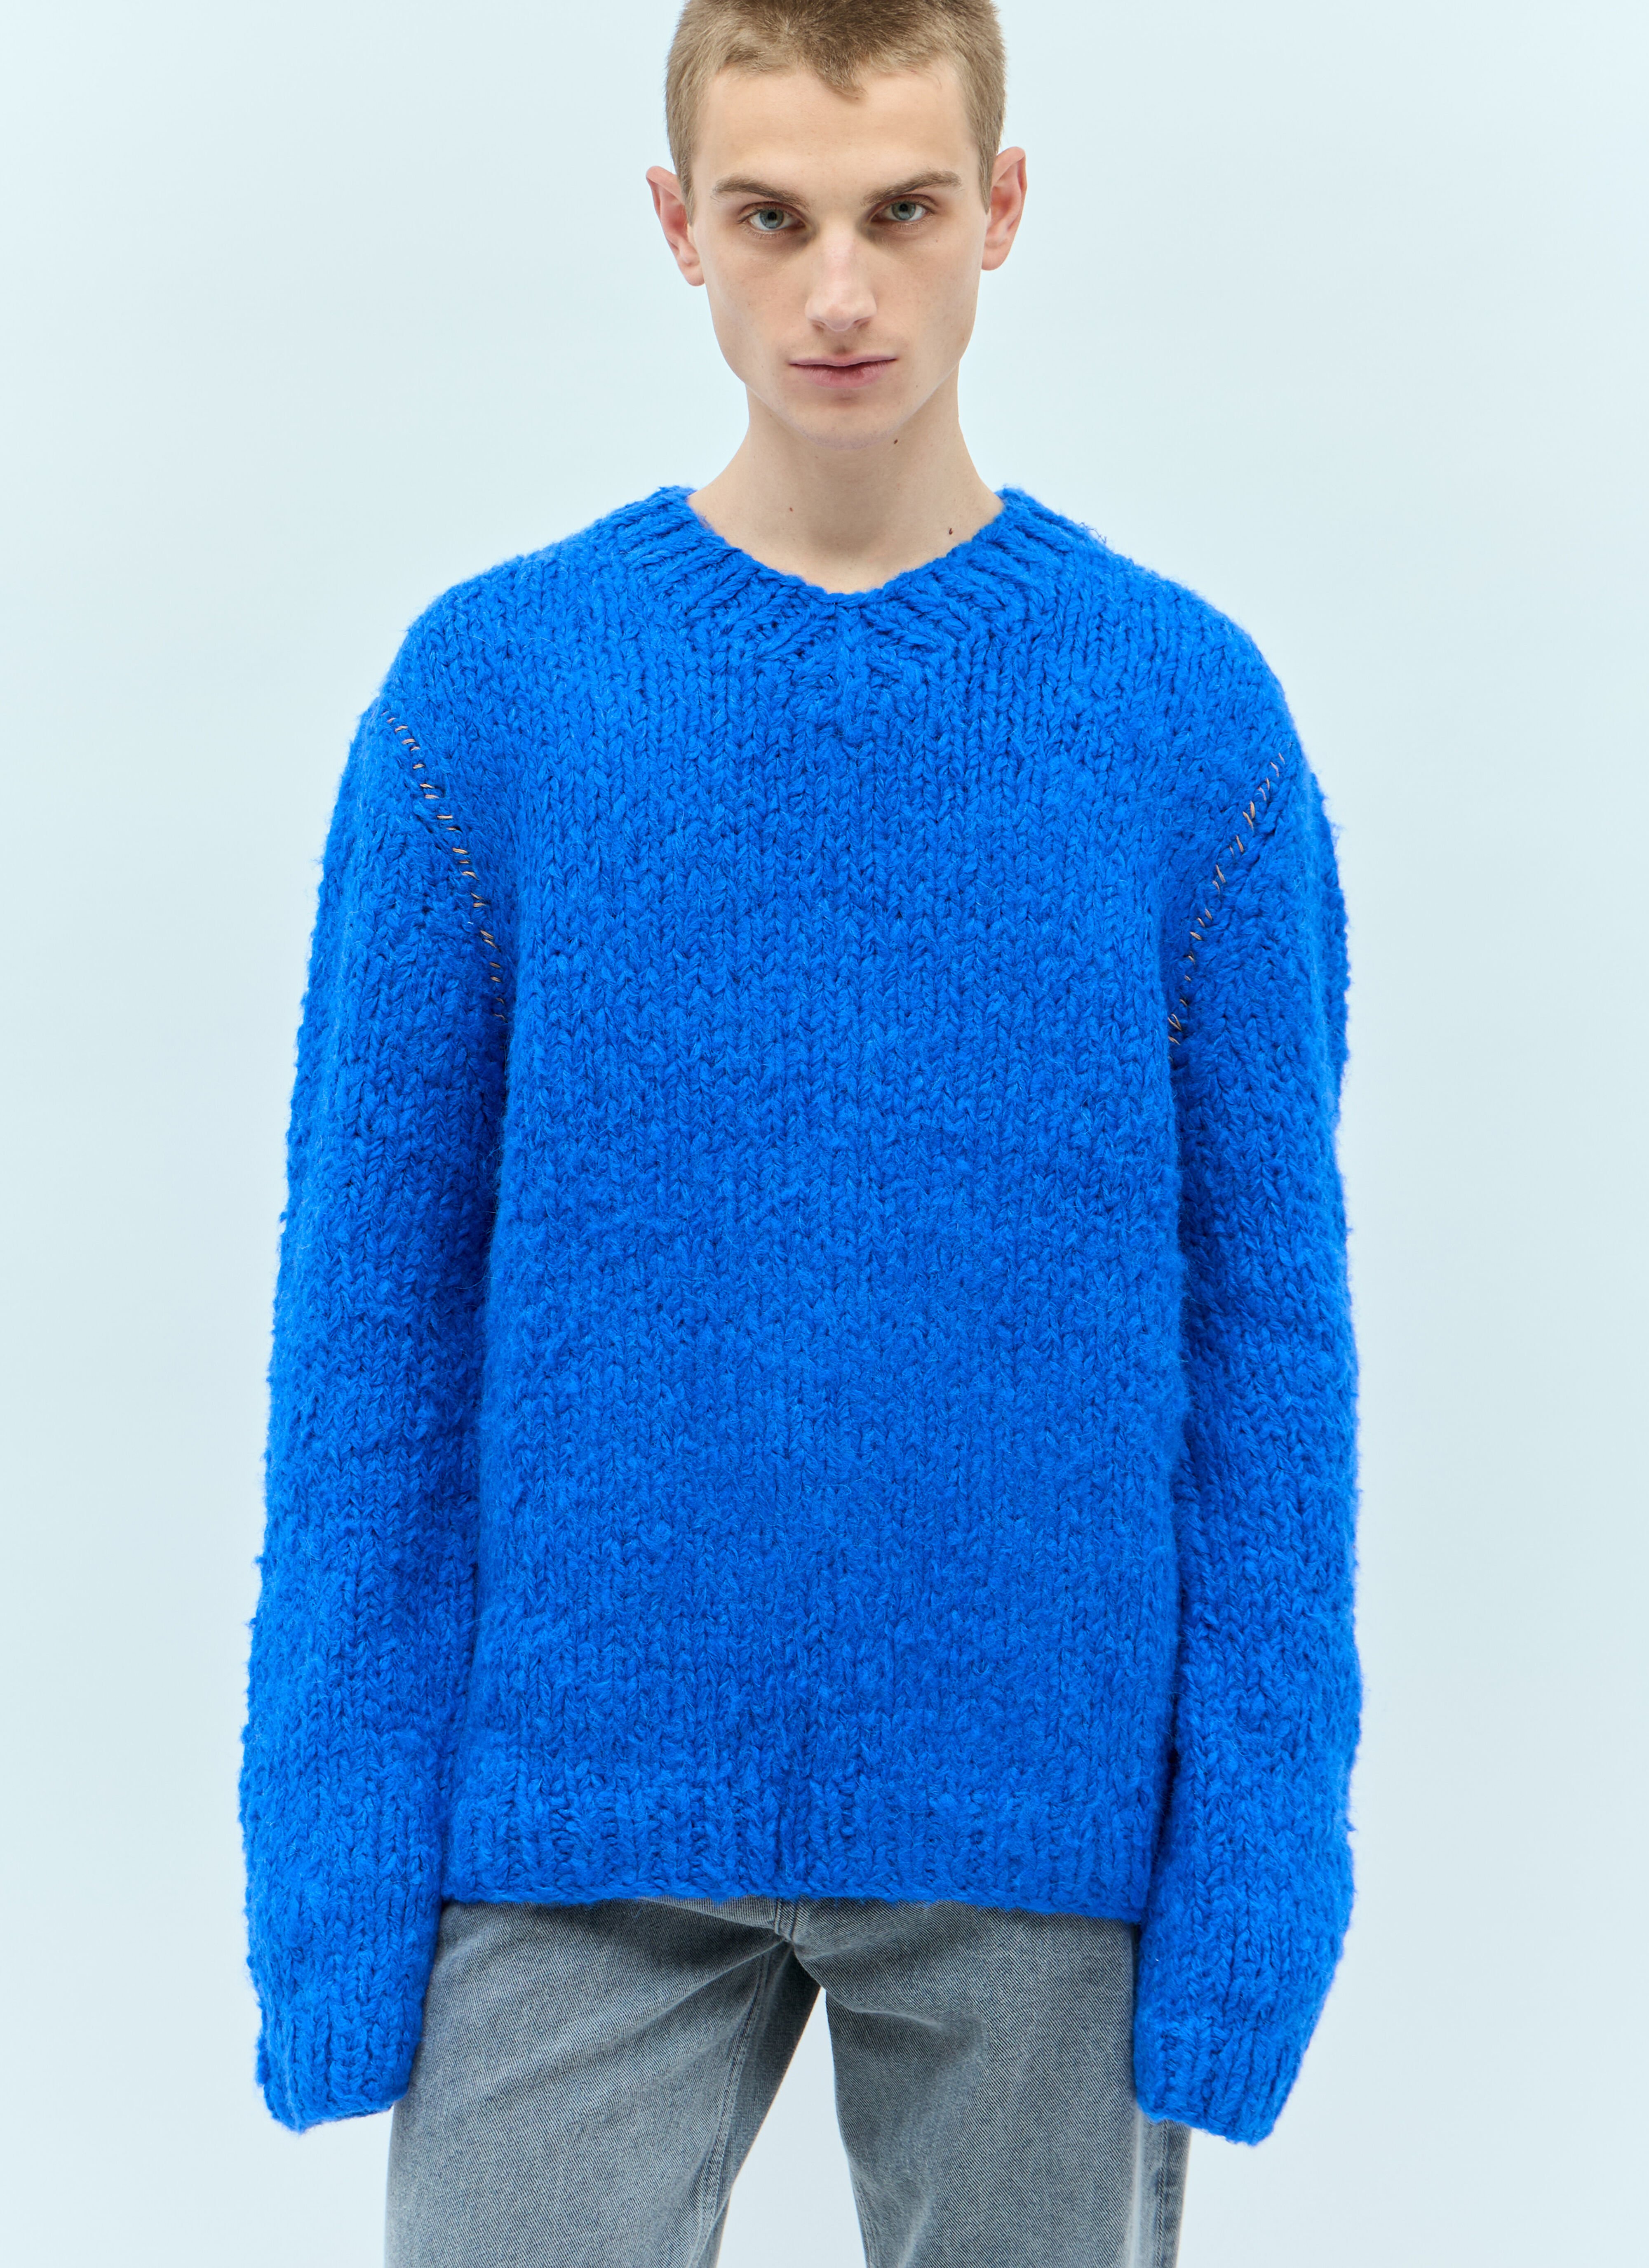 DRx x STEFAN MEIER x LN-CC Knitted Alpaca Mix Sweater Green drs0350009